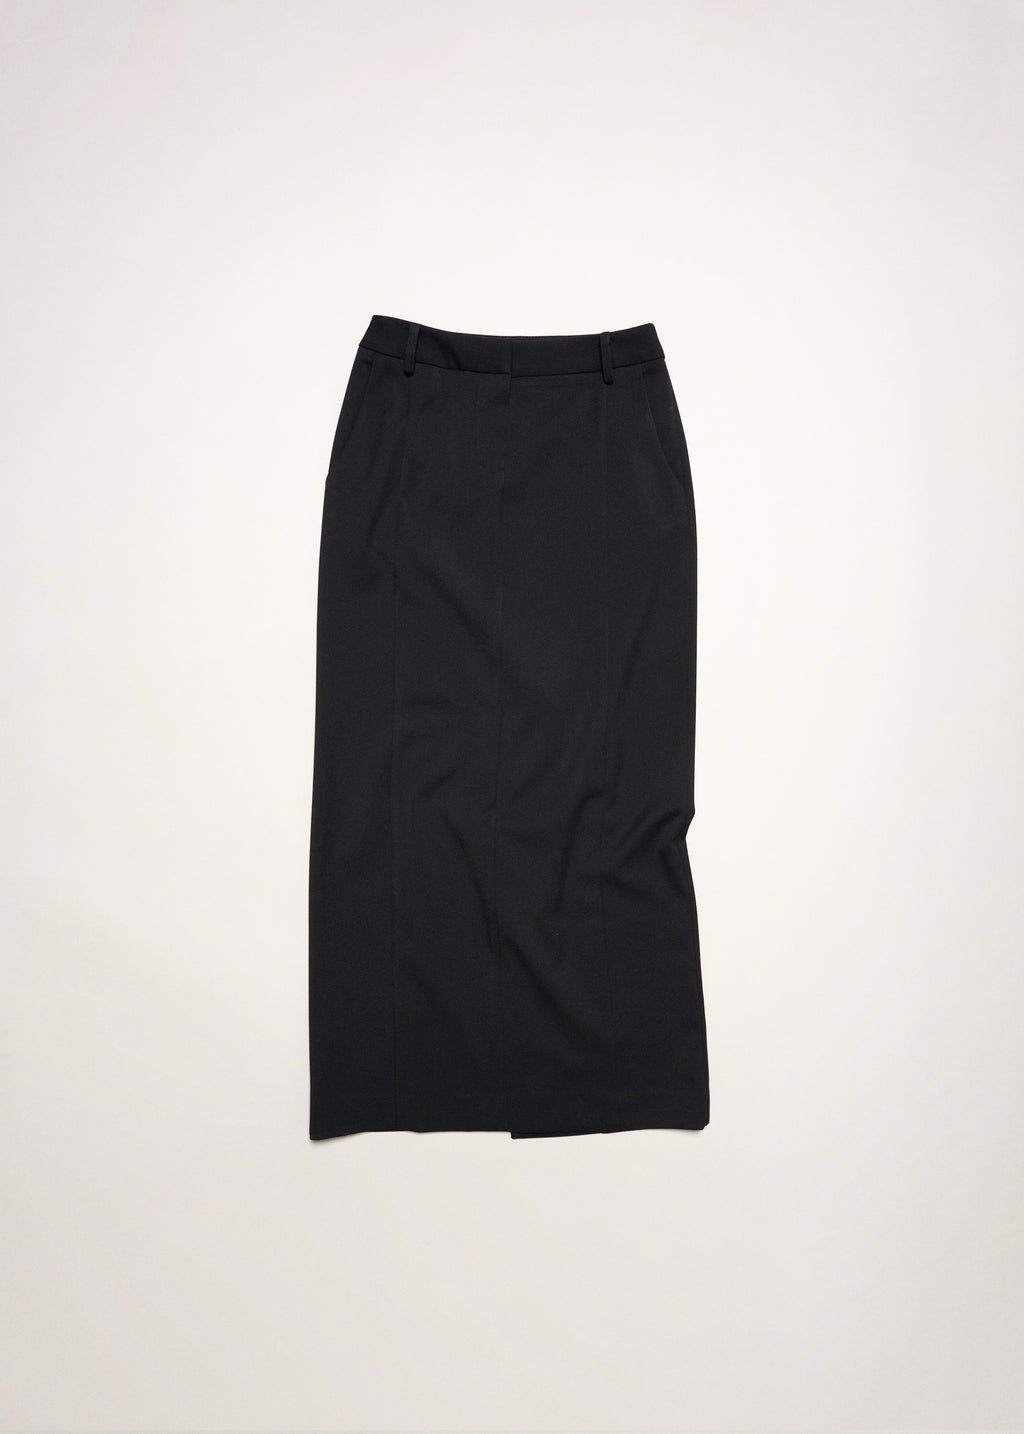 All-Day Maxi Skirt ~ Black